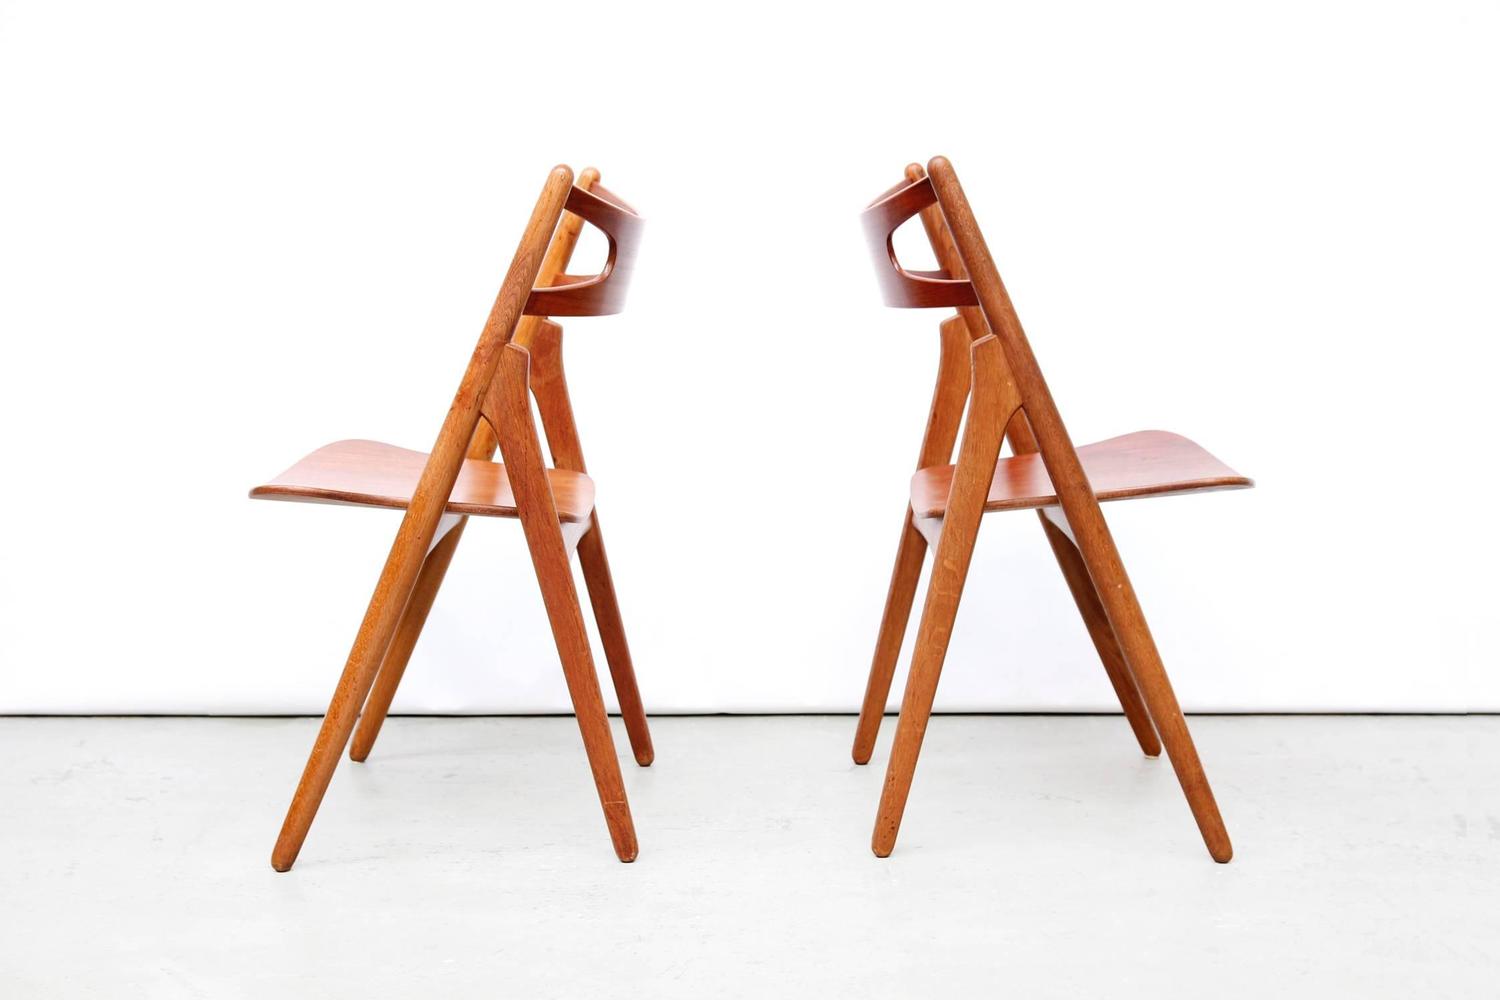  Model CH29 Sawbuck Chairs by Hans Wegner, Denmark For Sale at 1stdibs